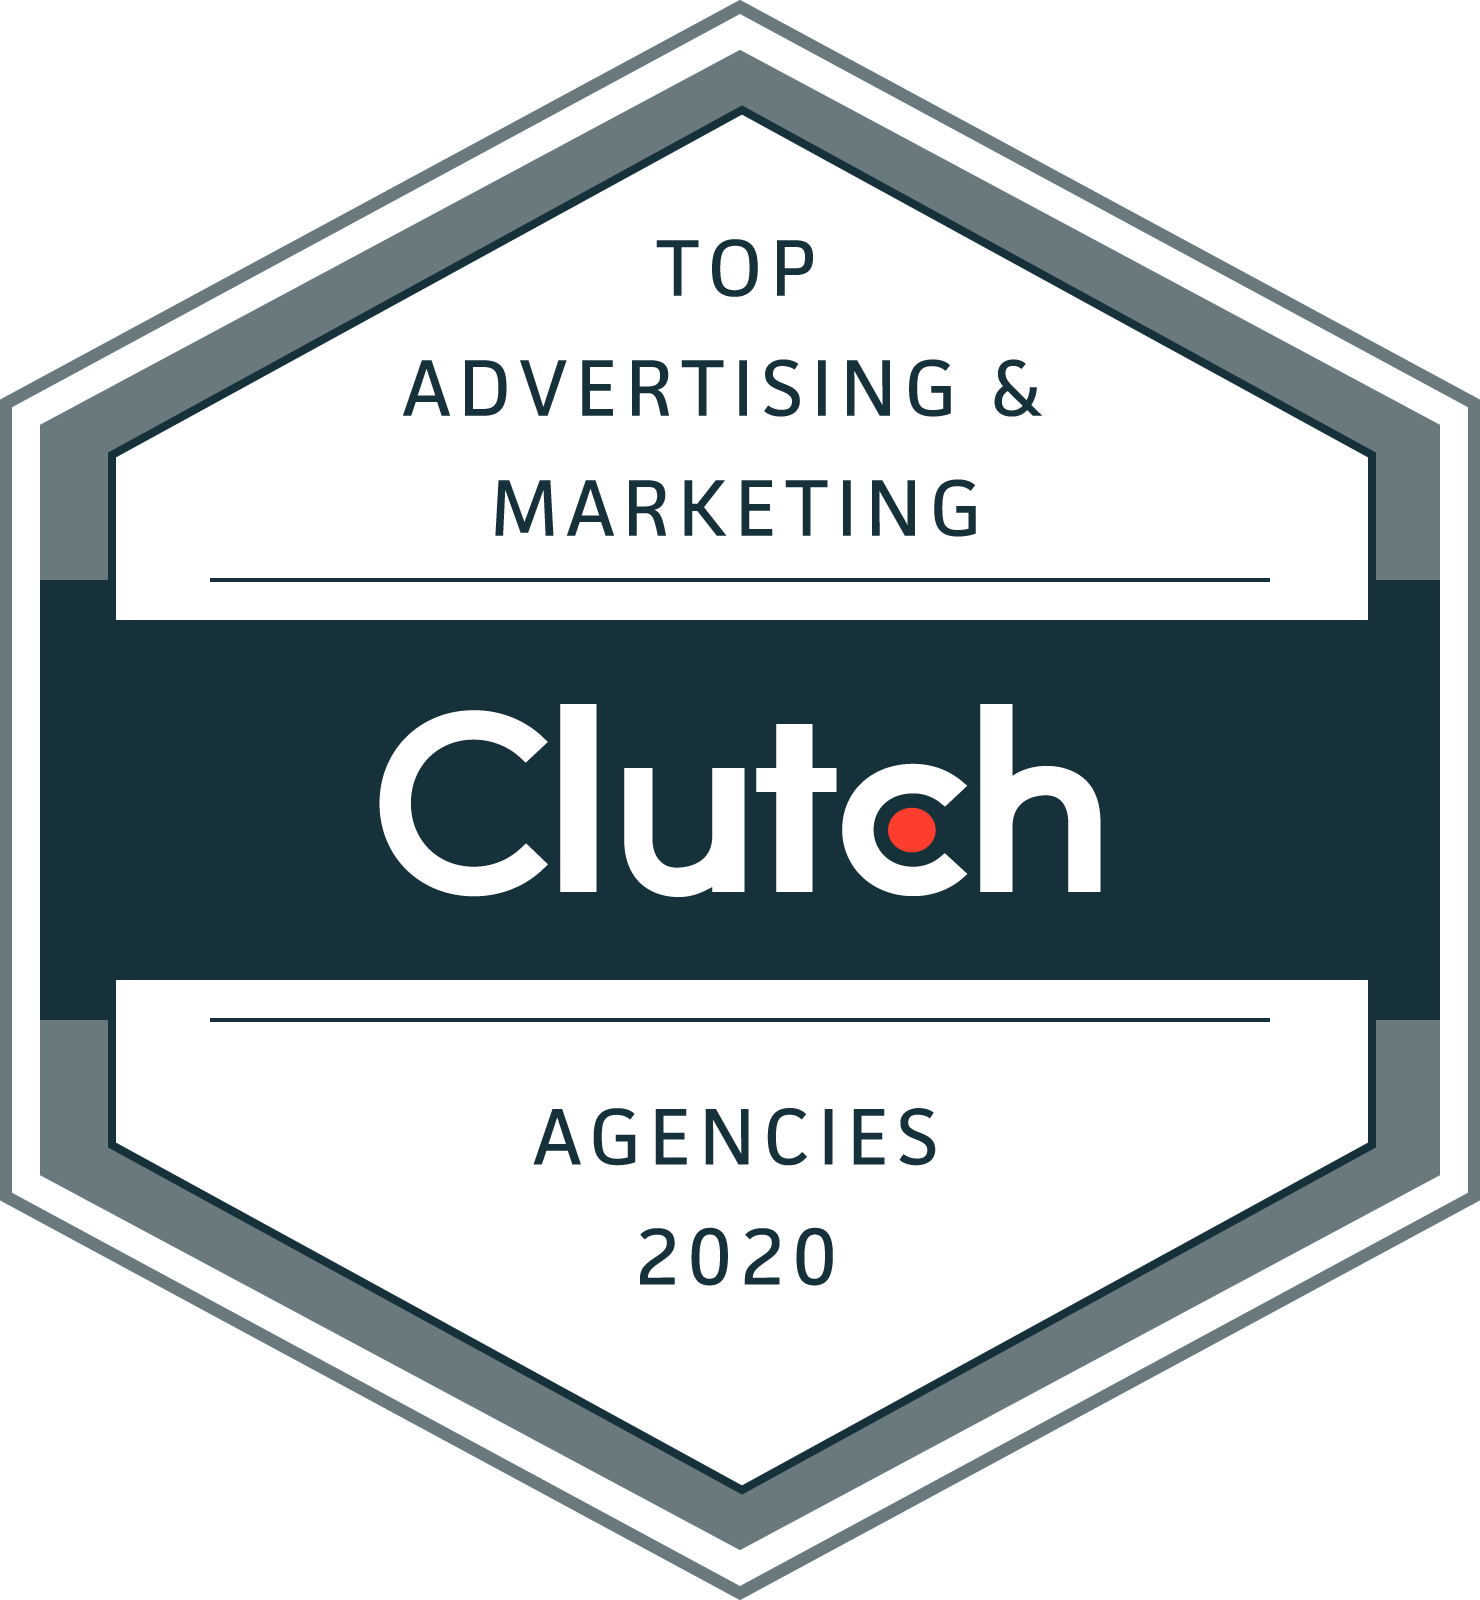 Clutch Top Advertising & Marketing Award Agencies 2020